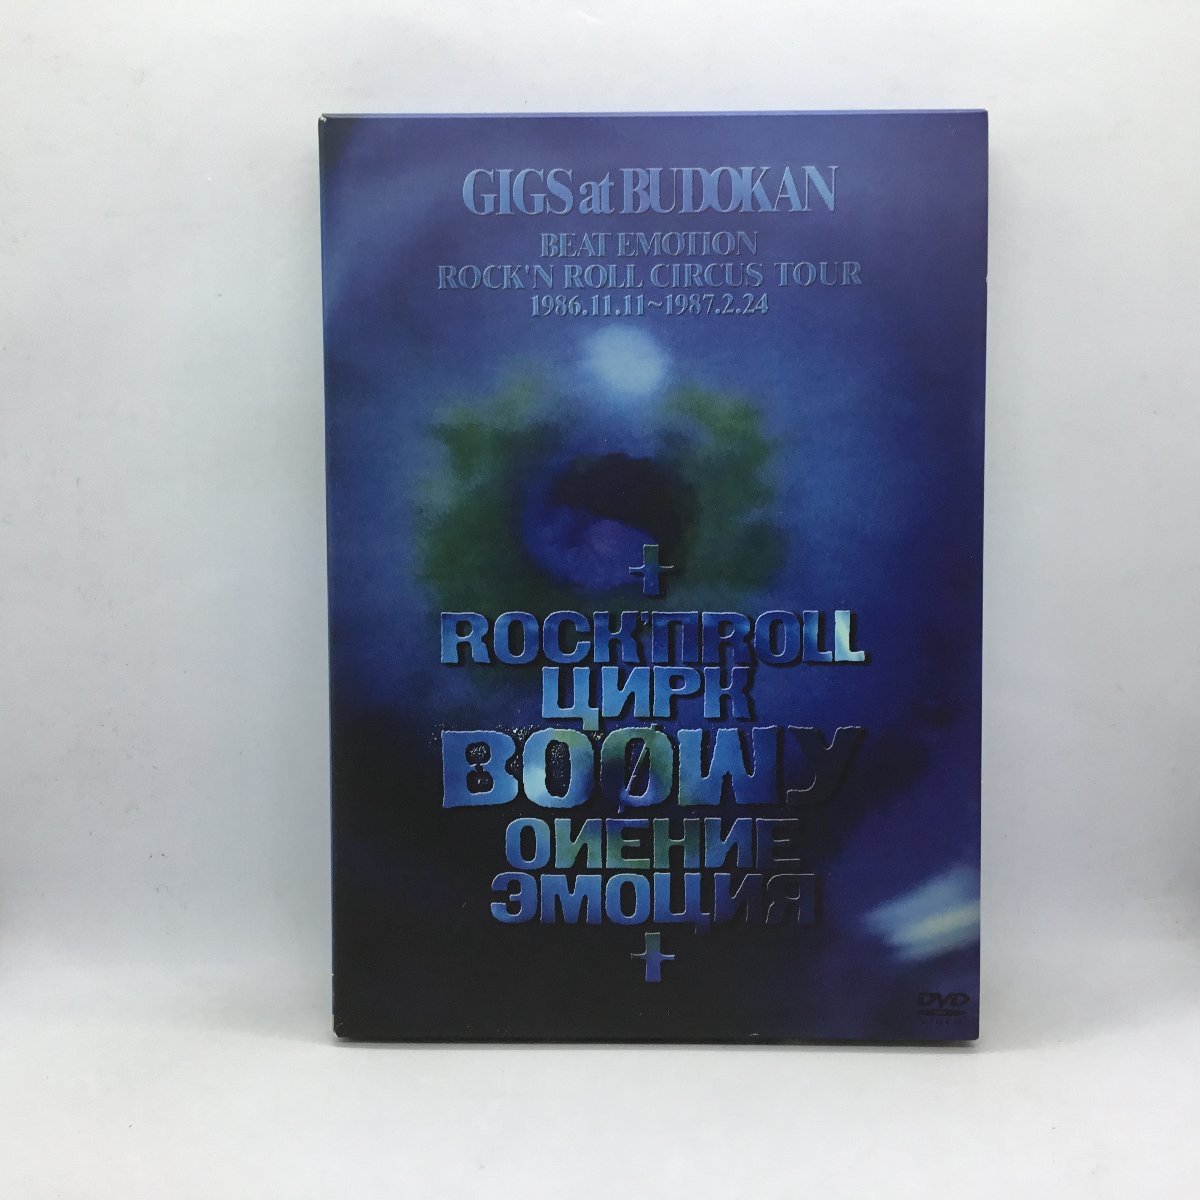 BOOWY/GIGS at BUDOKAN BEAT EMOTION ROCK'N ROLL CIRCUS TOUR 1986.11.11～1987.2.24 ▲DVD TOBF 5307_画像1